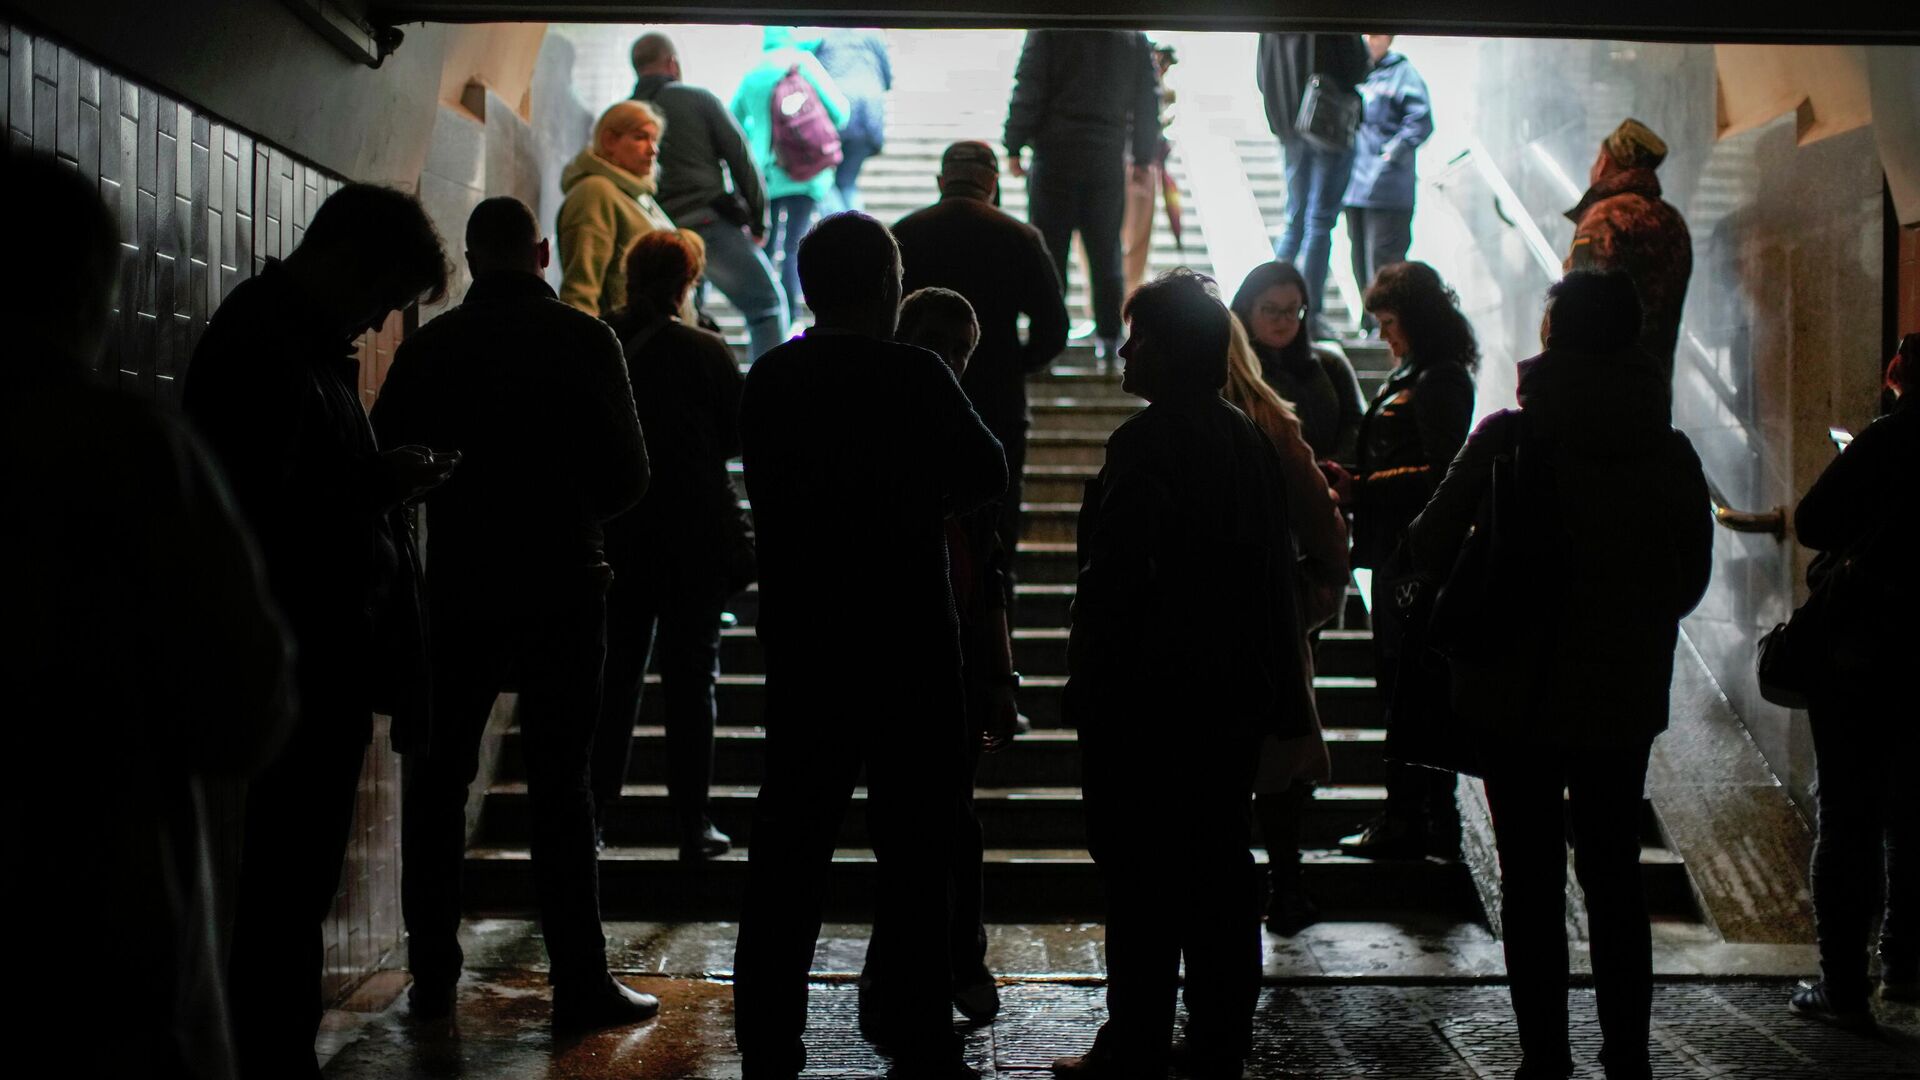 Люди толпятся на станции метро в Харькове - РИА Новости, 1920, 01.11.2022